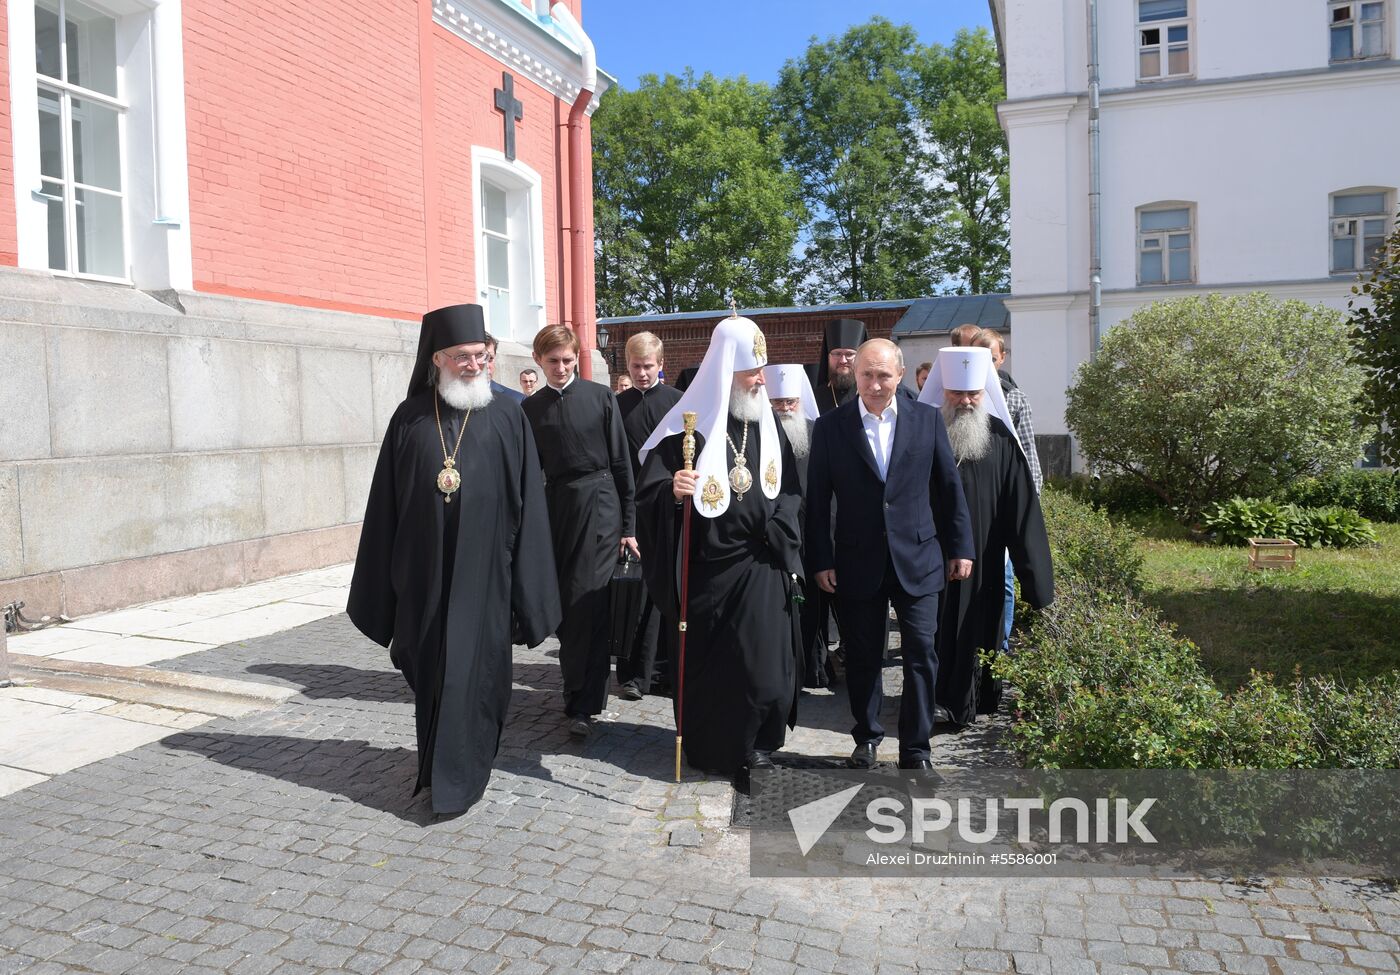 Vladimir Putin visits Valaam Monastery